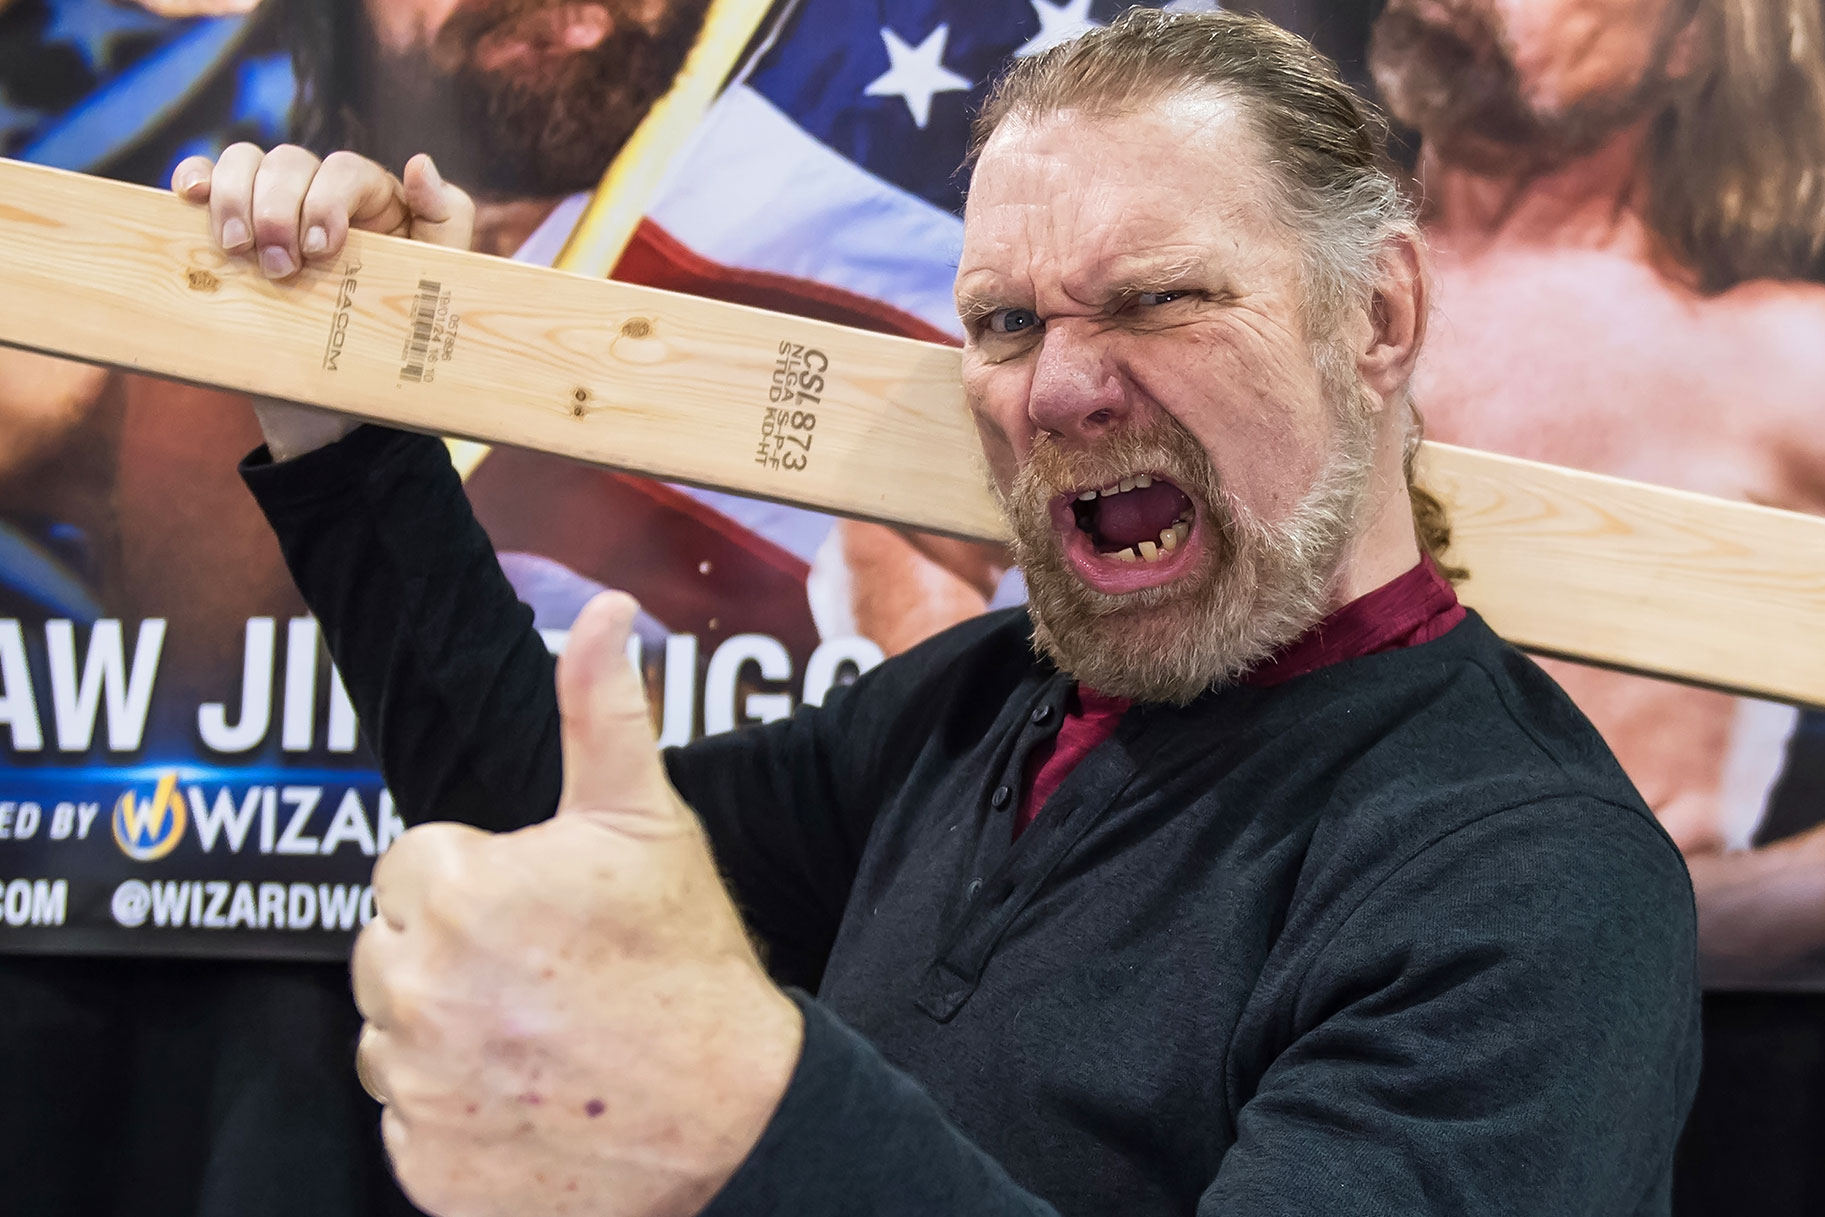 Professional wrestler 'Hacksaw' Jim Duggan attends the 2019 Wizard World Comic Con at Pennsylvania Convention Center